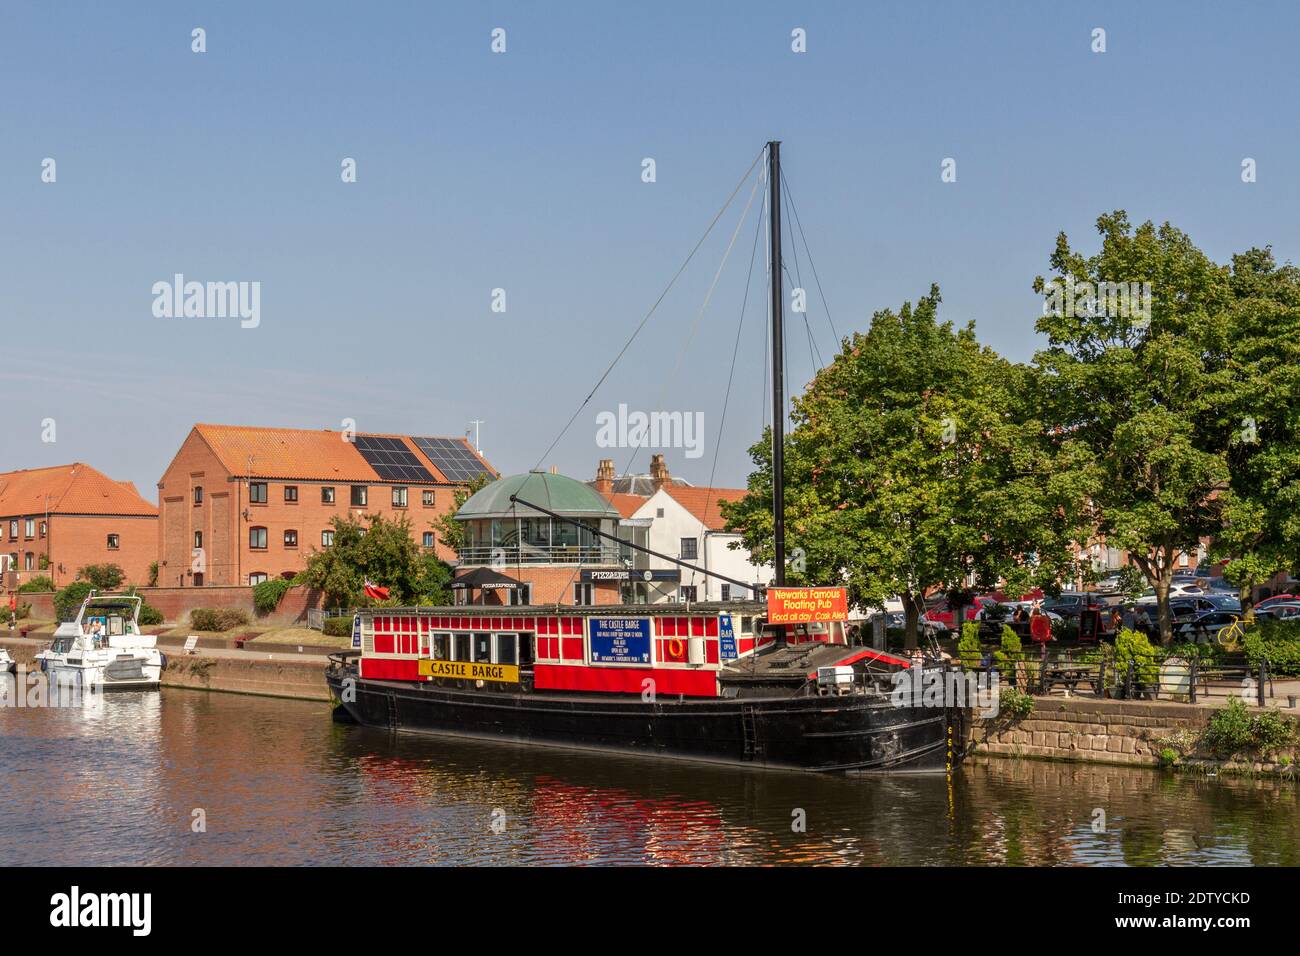 Das Cafe Castle Barge liegt am Fluss Trent in Newark-on-Trent, Nottinghamshire, Großbritannien. Stockfoto